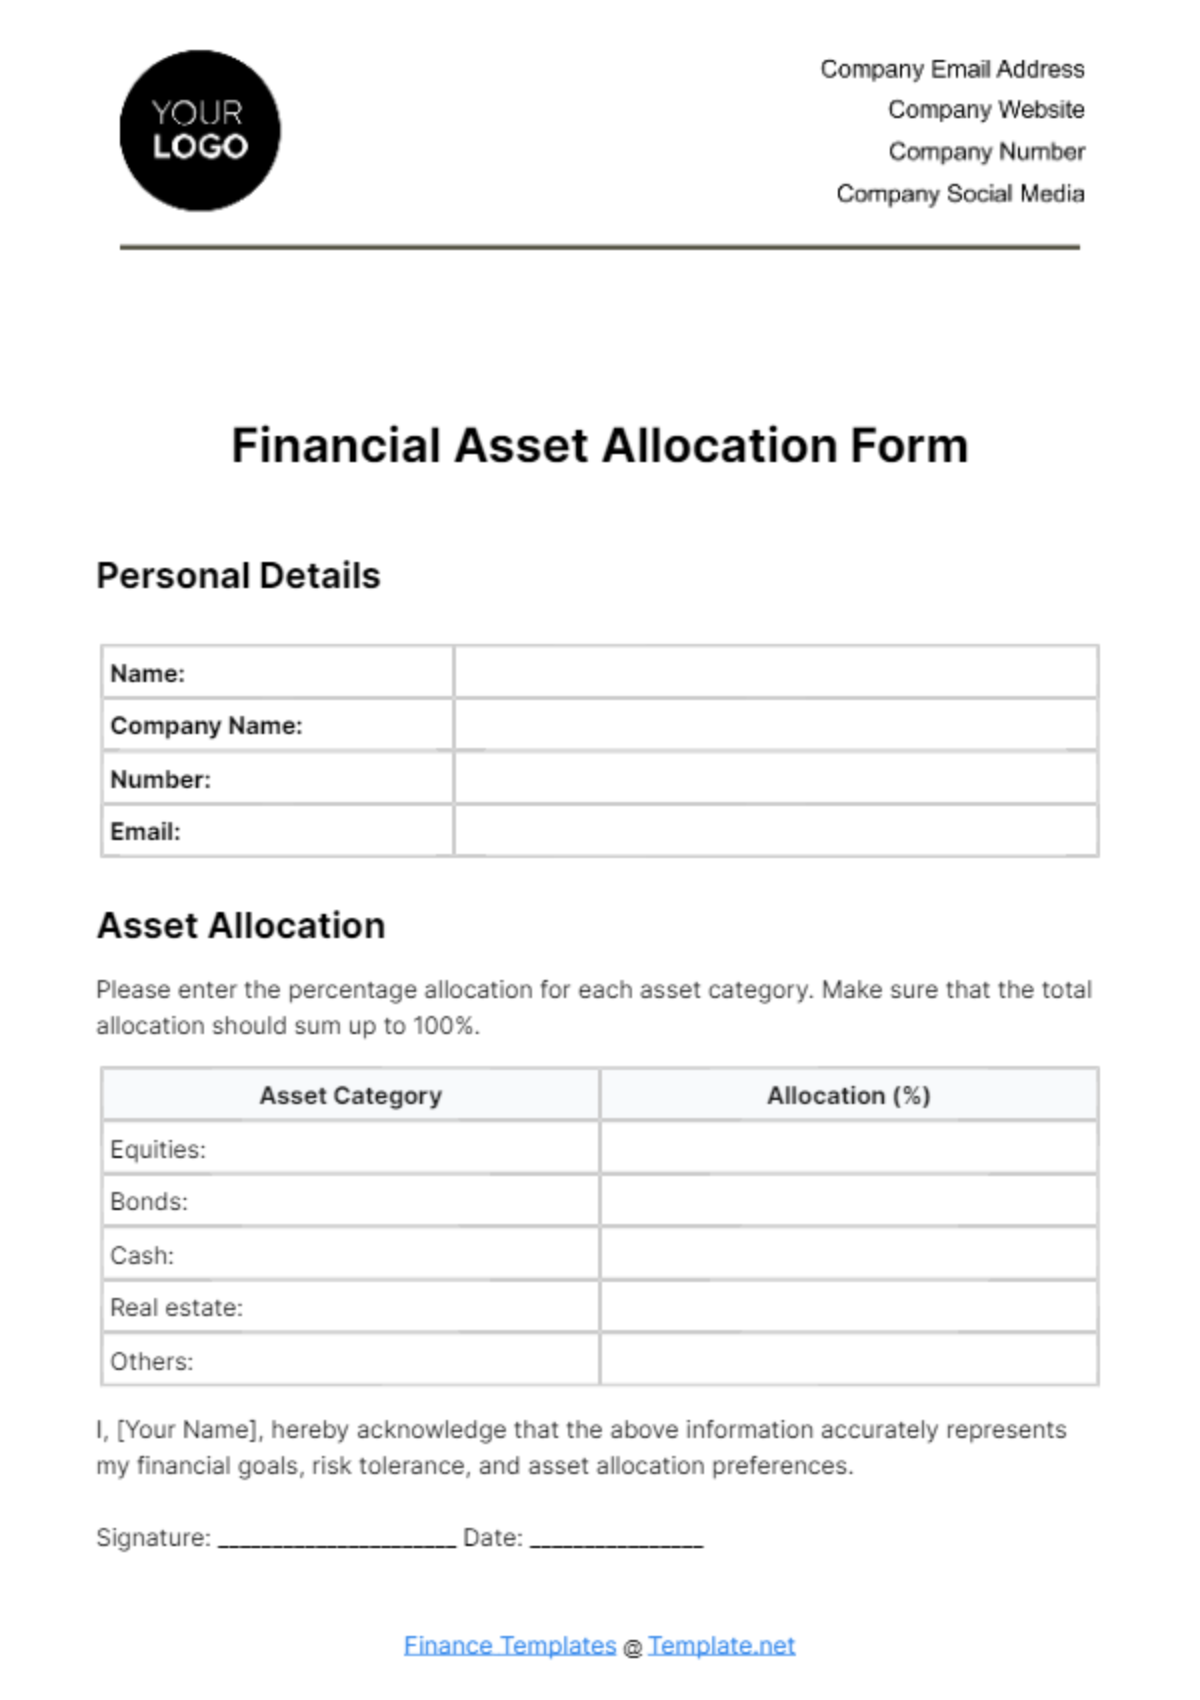 Financial Asset Allocation Form Template